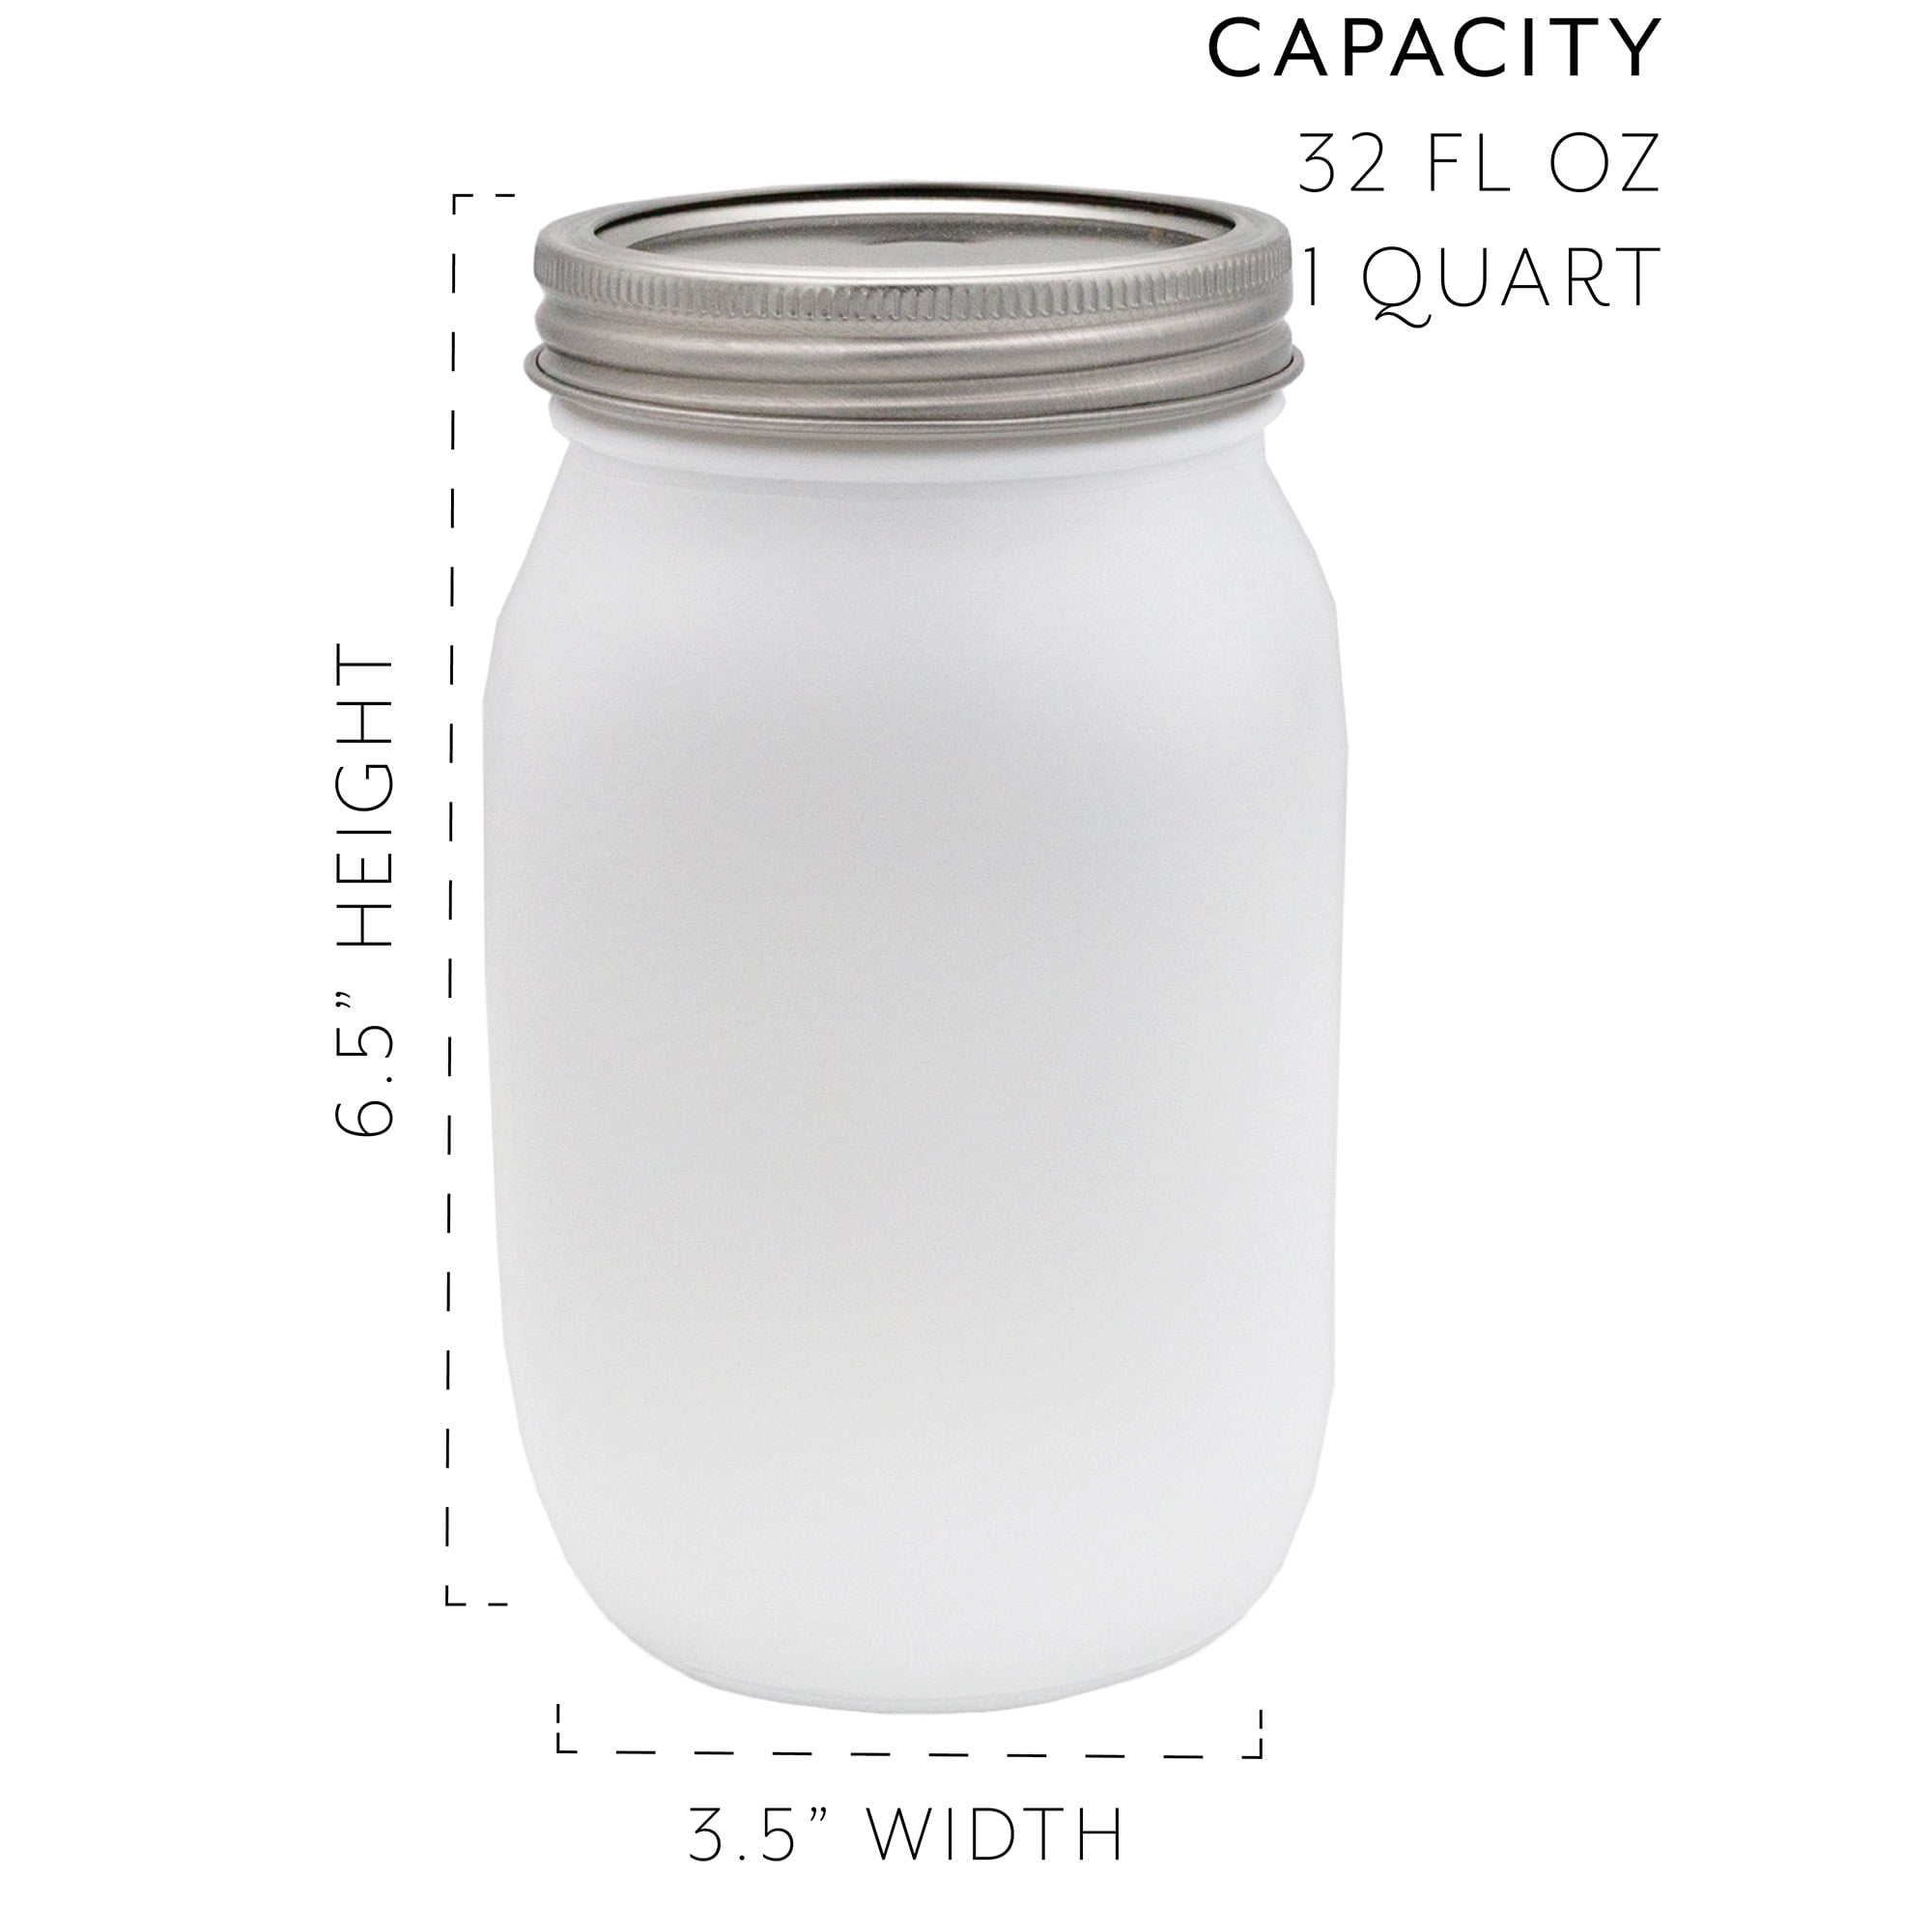 White Mason Jar / Chalk Painted / Glass Bathroom Jar / Kitchen Canister /  Storage Jars / Home Organizer / Fairy Light Jar 